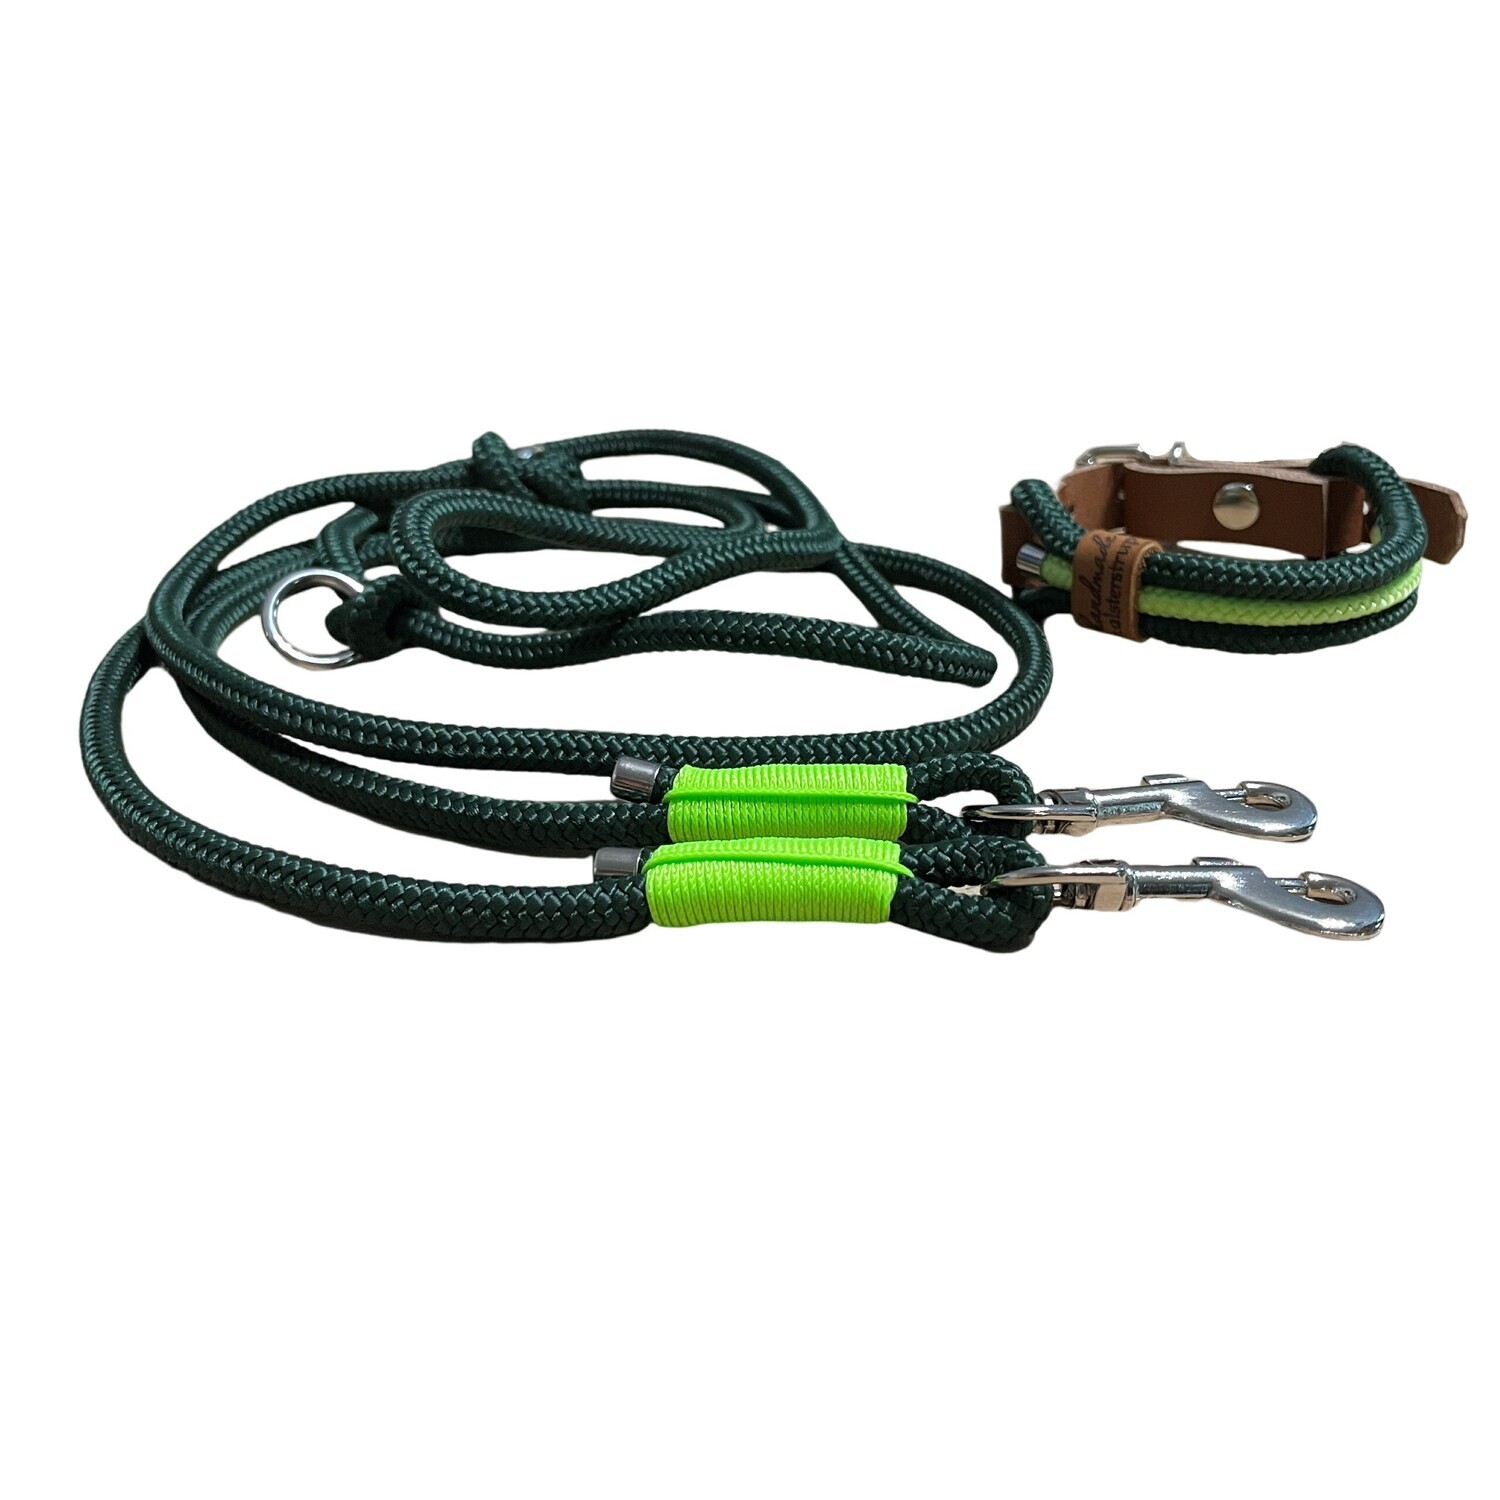 Leine Halsband Set verstellbar, dunkelgrün, grün, ab 17 cm Halsumfang für kleine Hunde